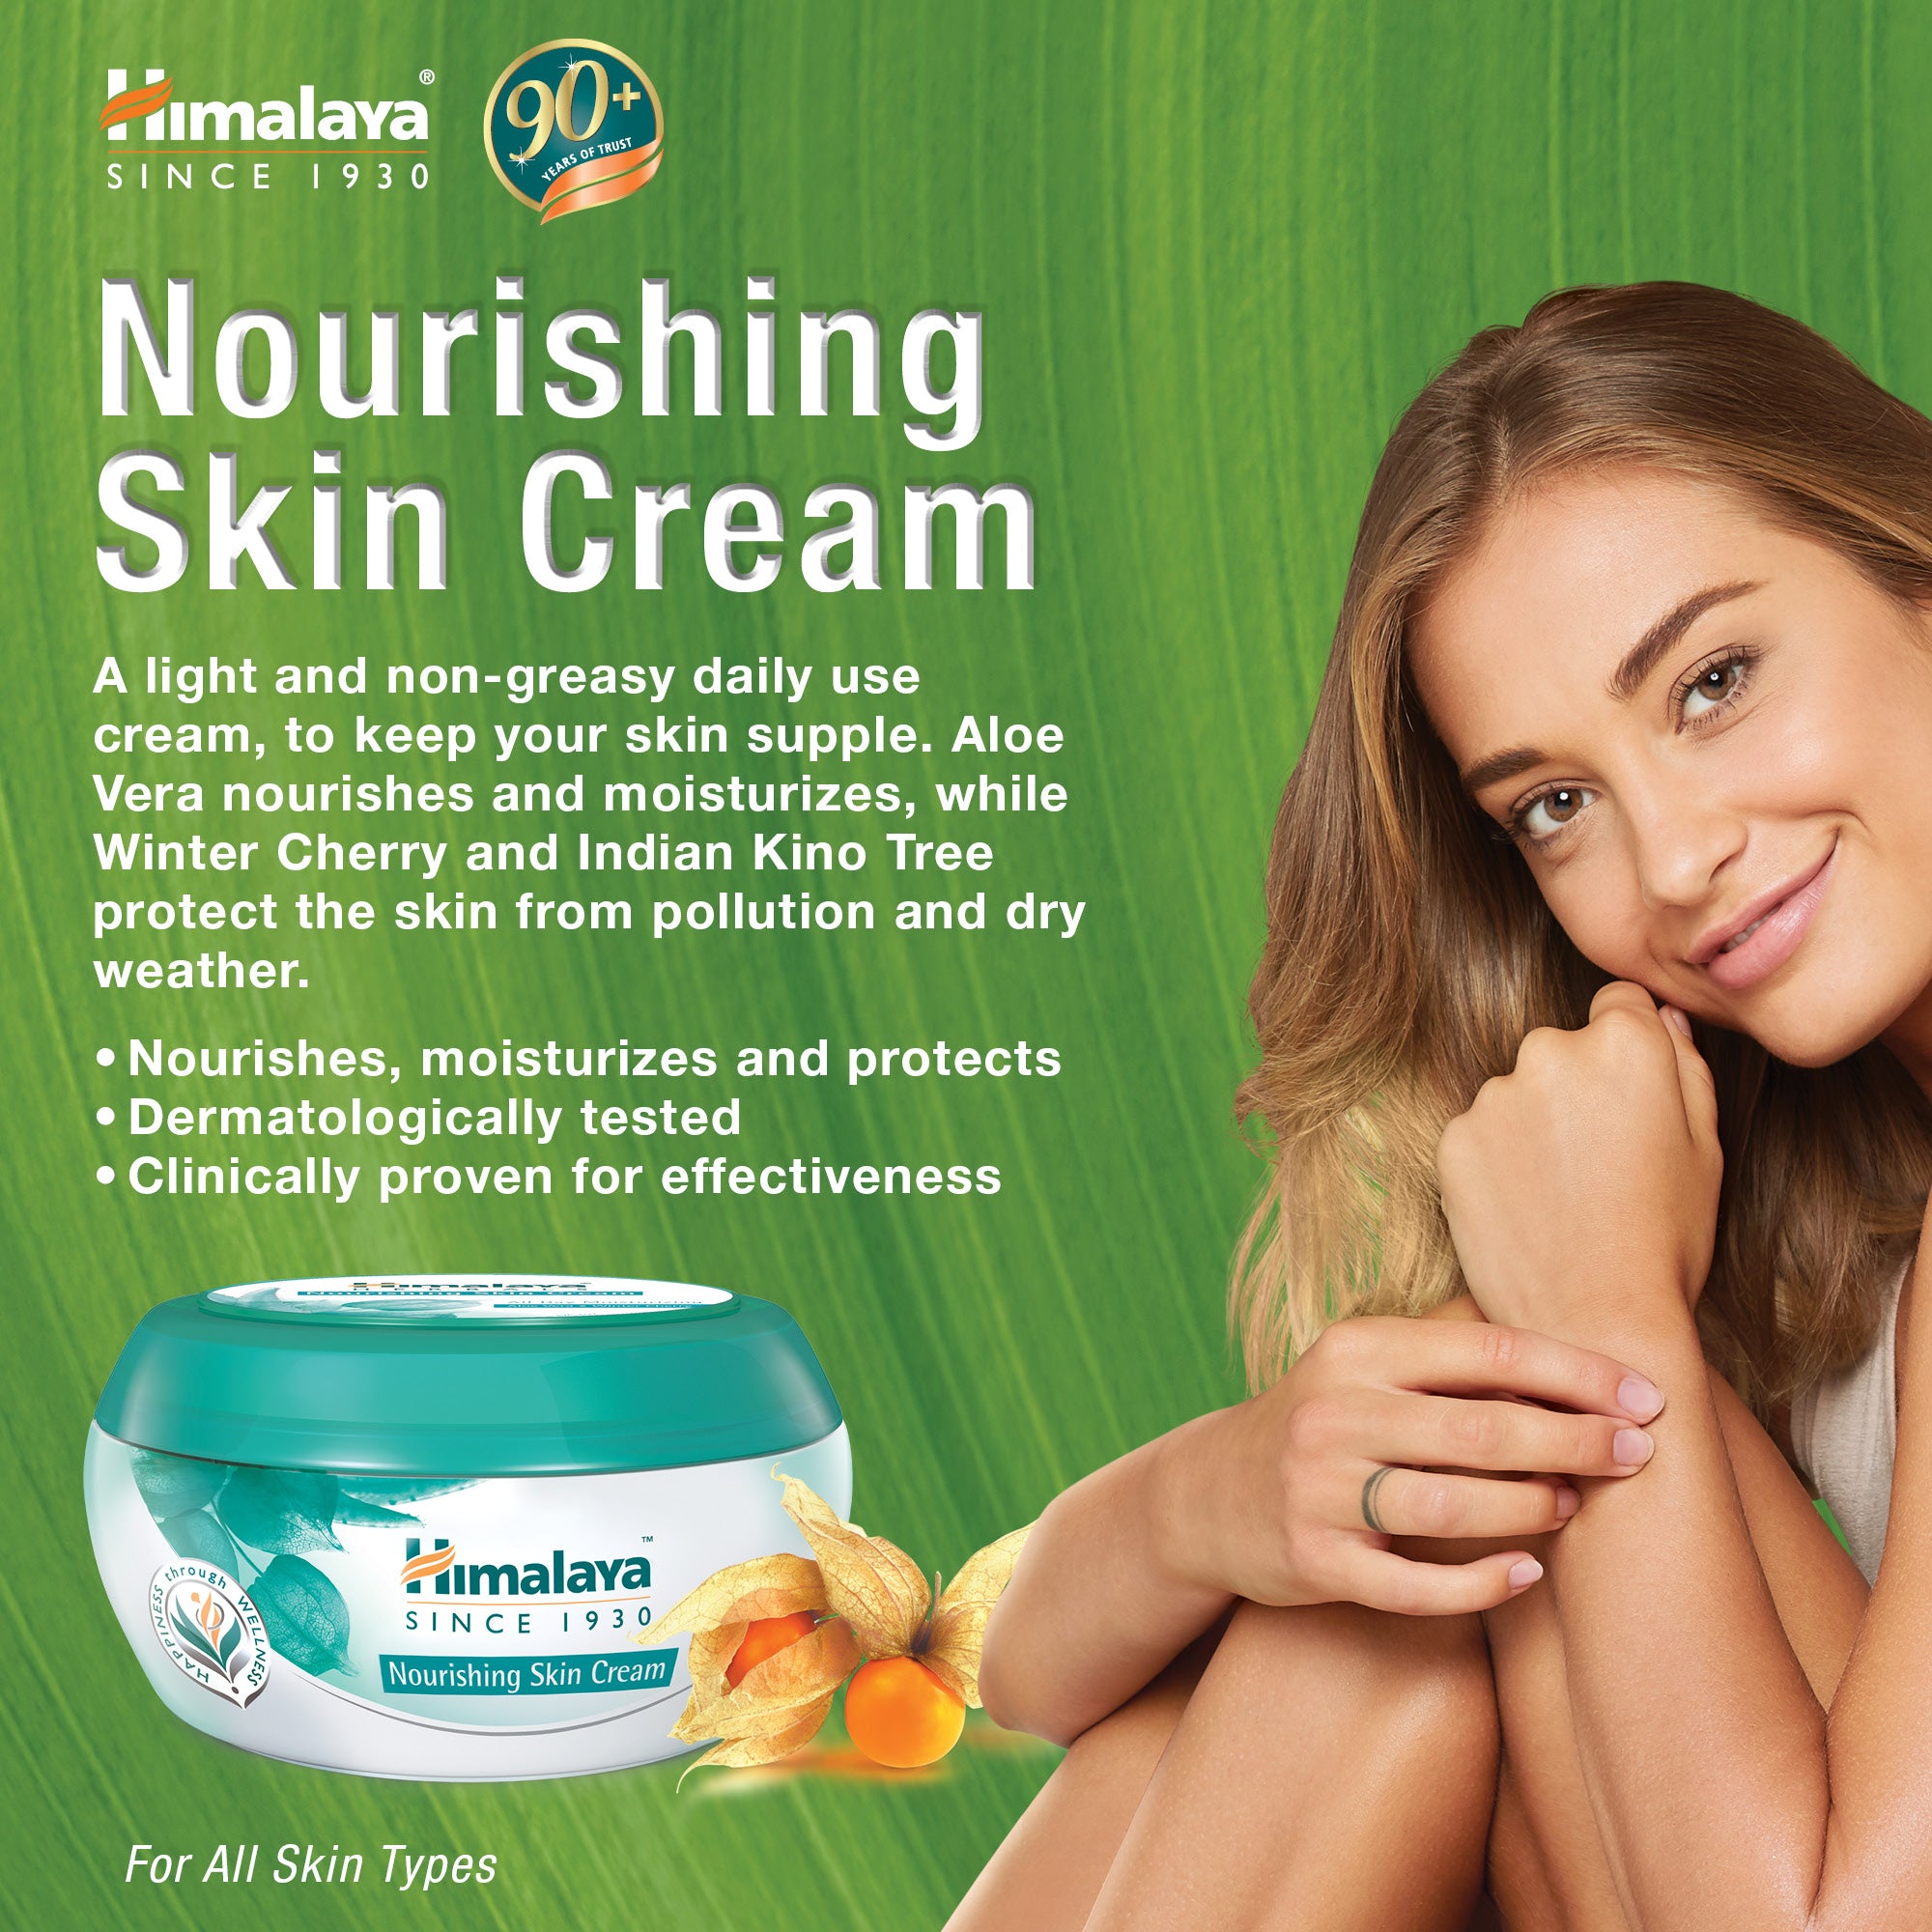 Himalaya Nourishing Skin Cream